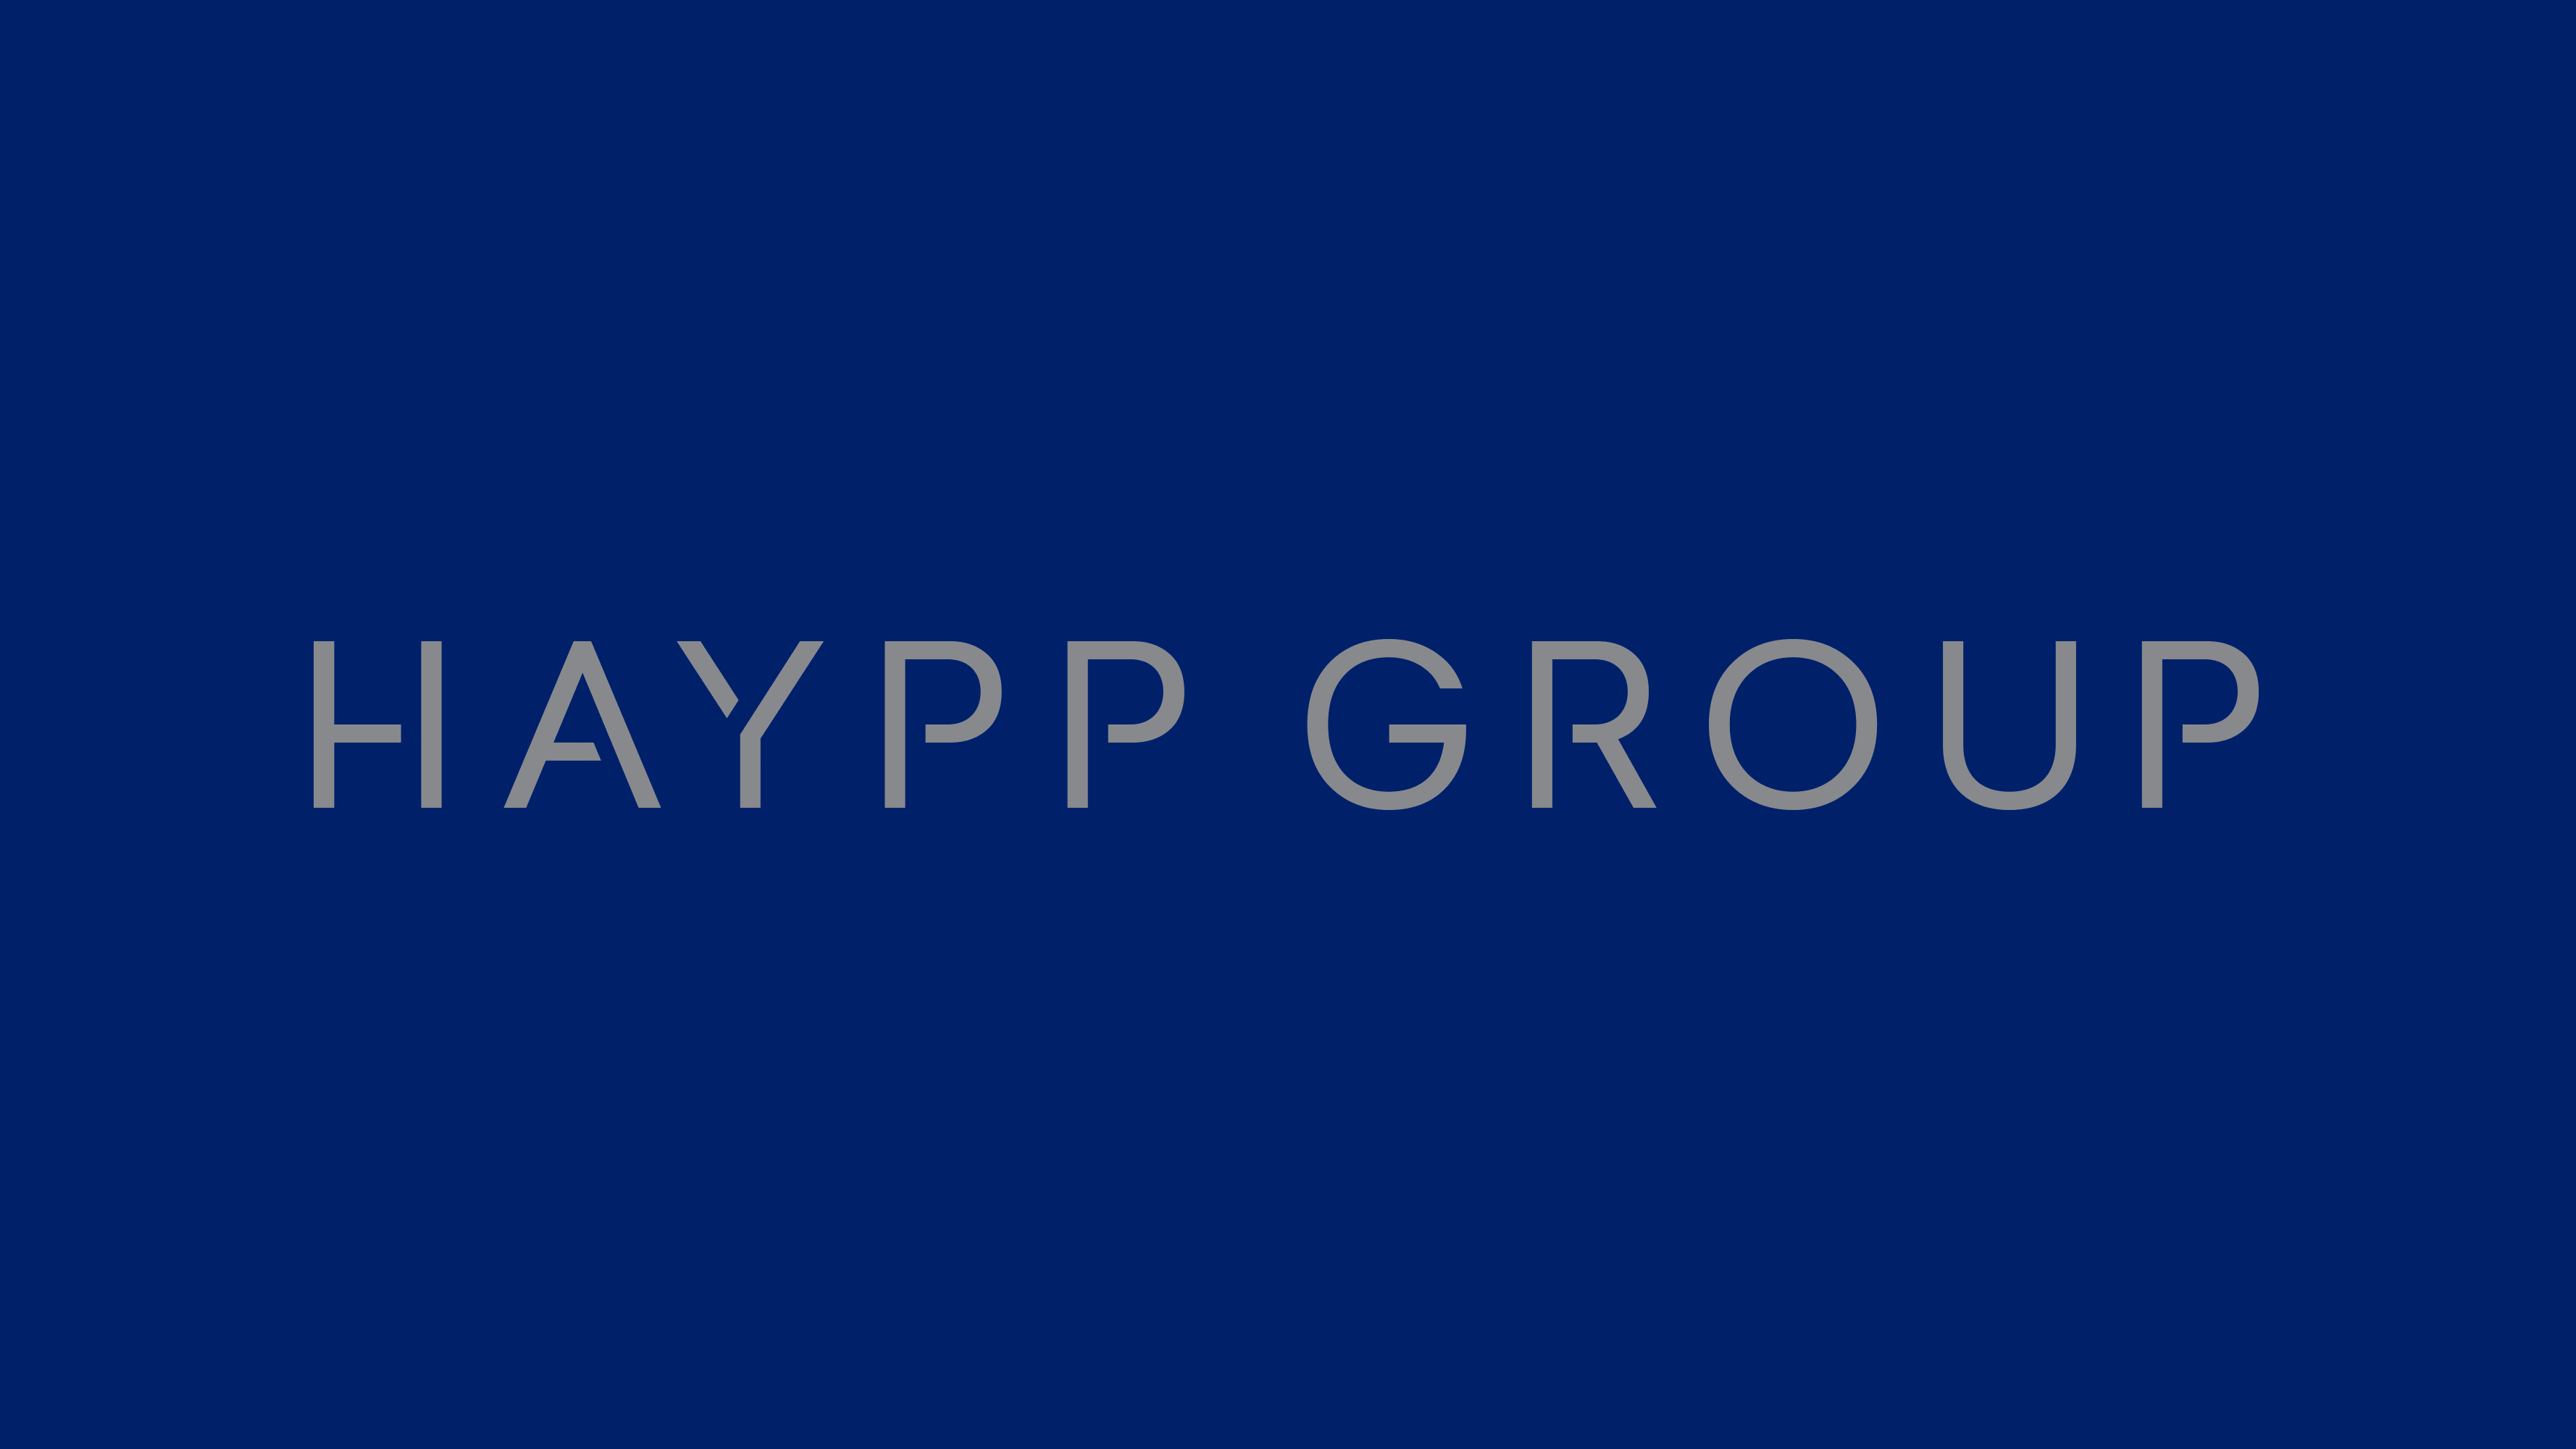 Haypp Group logo